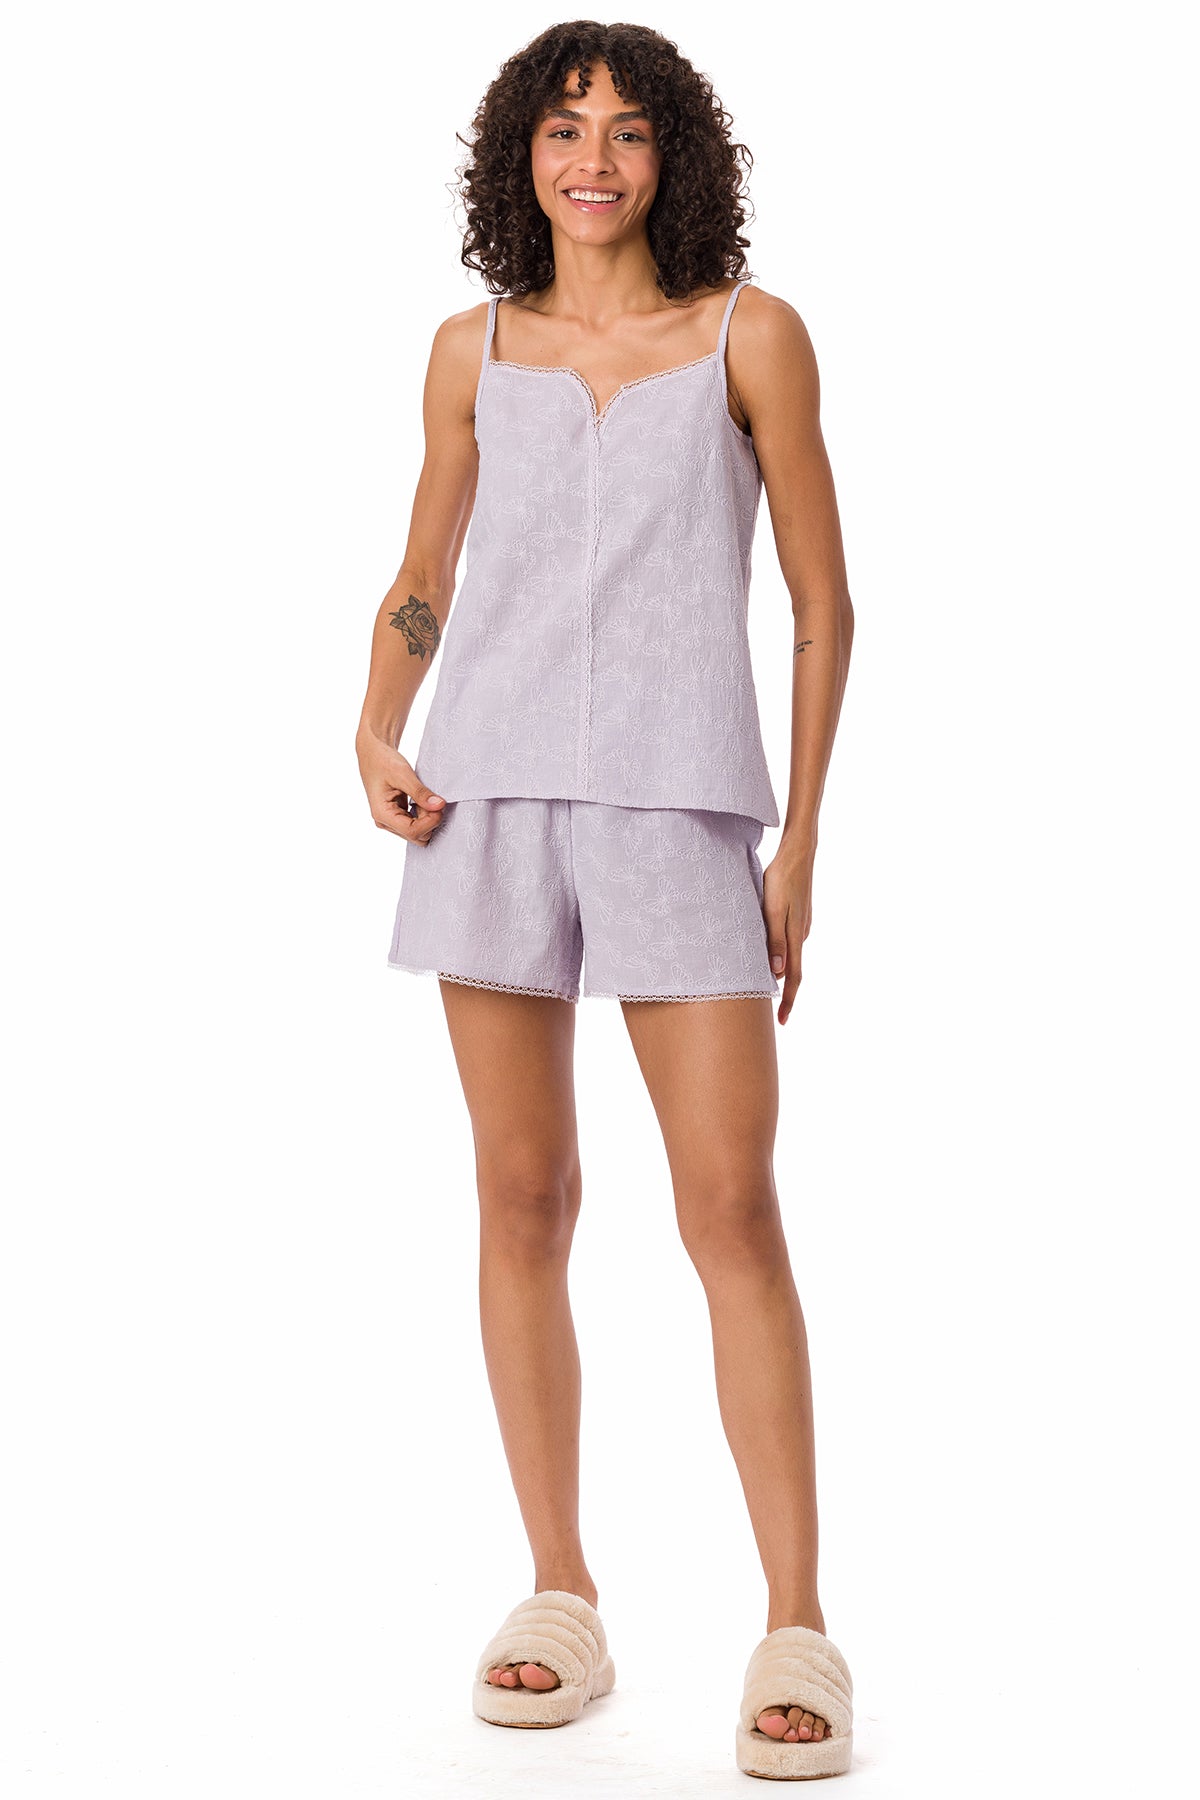 Suvi NYC women's 2-piece short pajama set Strap top and shorts 100% Cotton